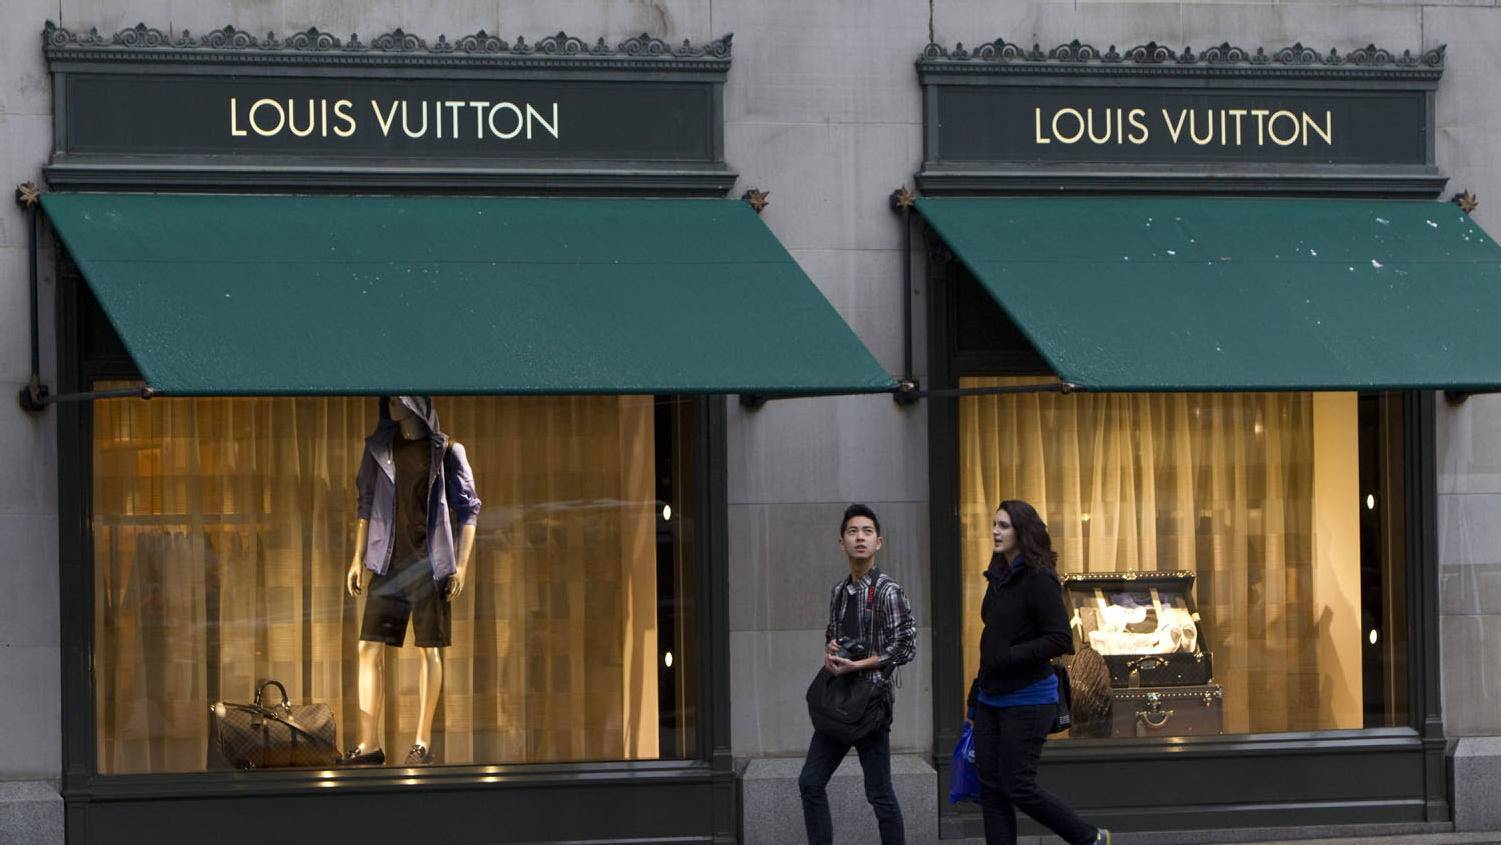 Louis Vuitton Wallets for sale in Ottawa, Ontario